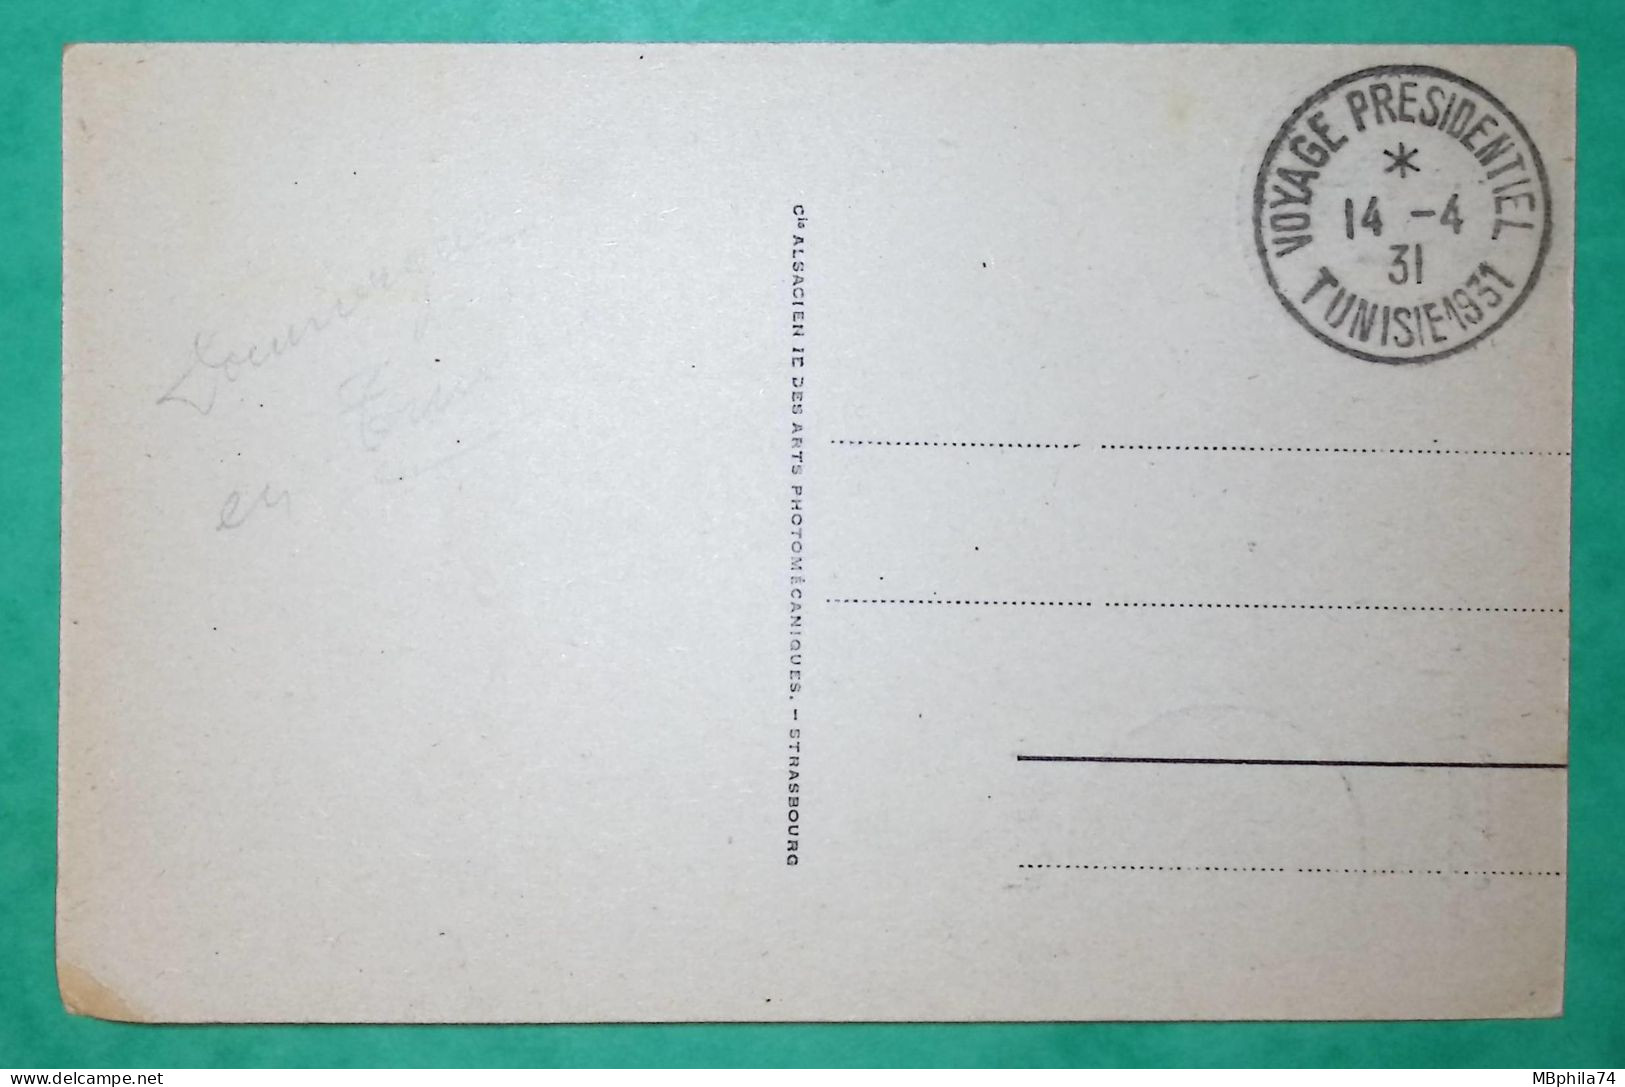 CARTE POSTALE VOYAGE PRESIDENTIEL TUNIS 1931 TUNISIE MOSQUEE SIDI EL BECHIR COVER FRANCE - Briefe U. Dokumente